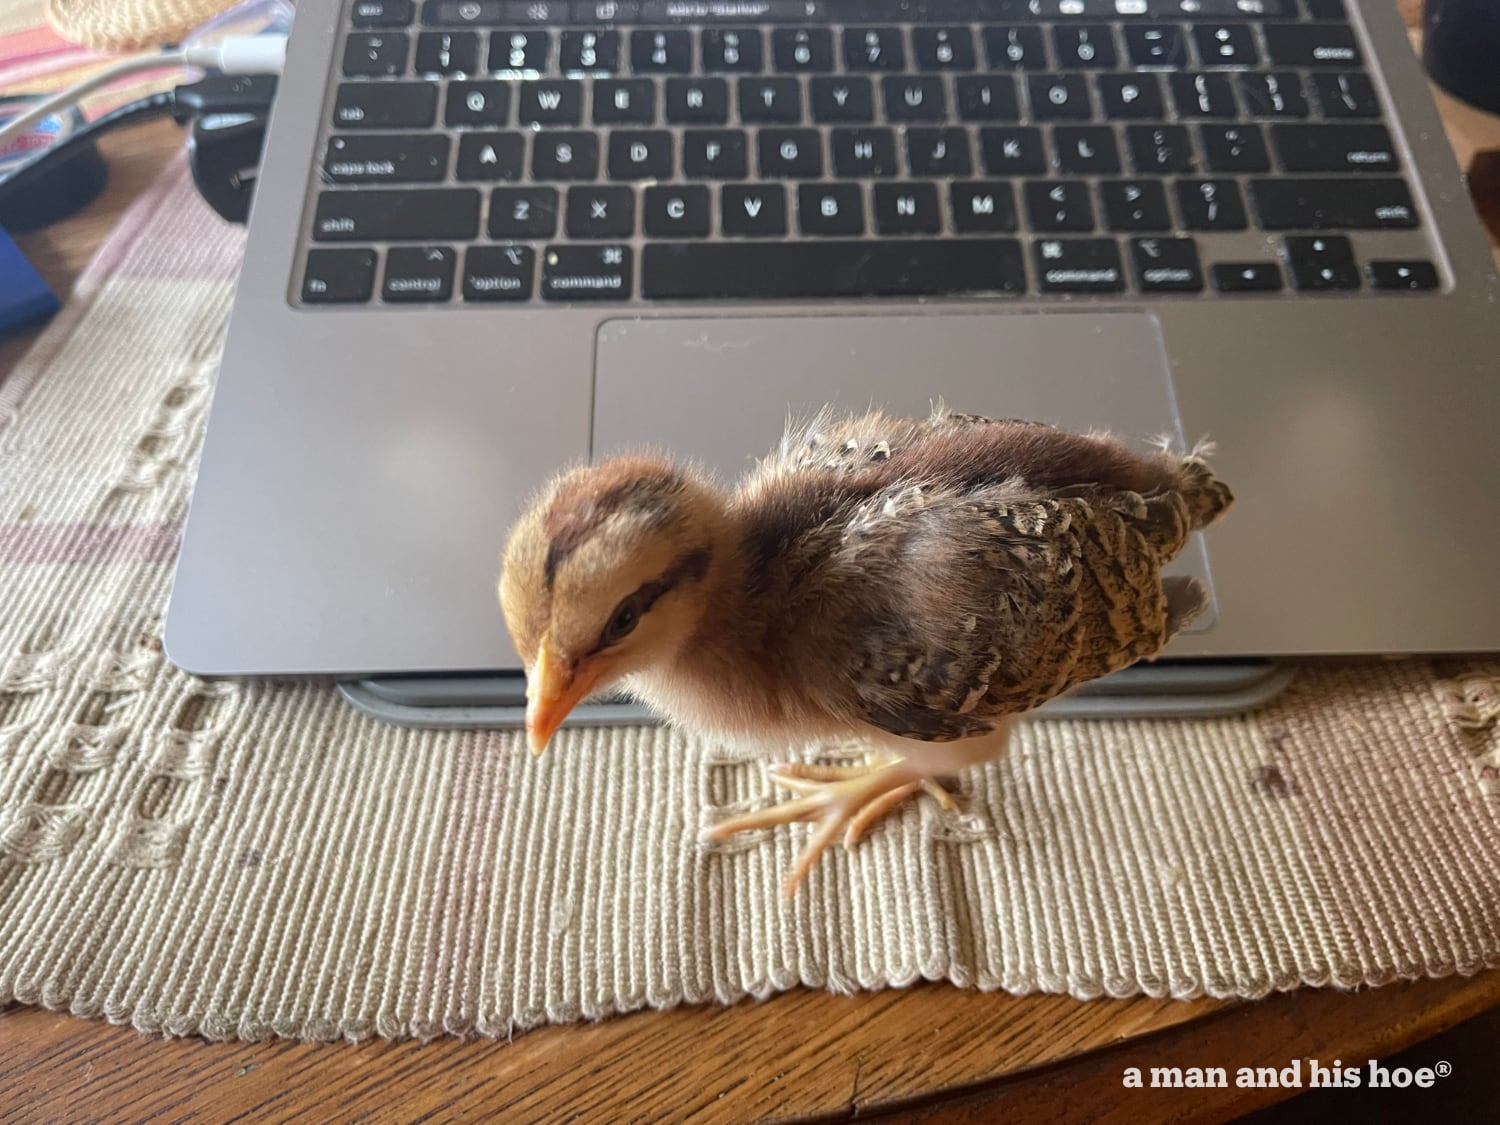 Chick by keyboard